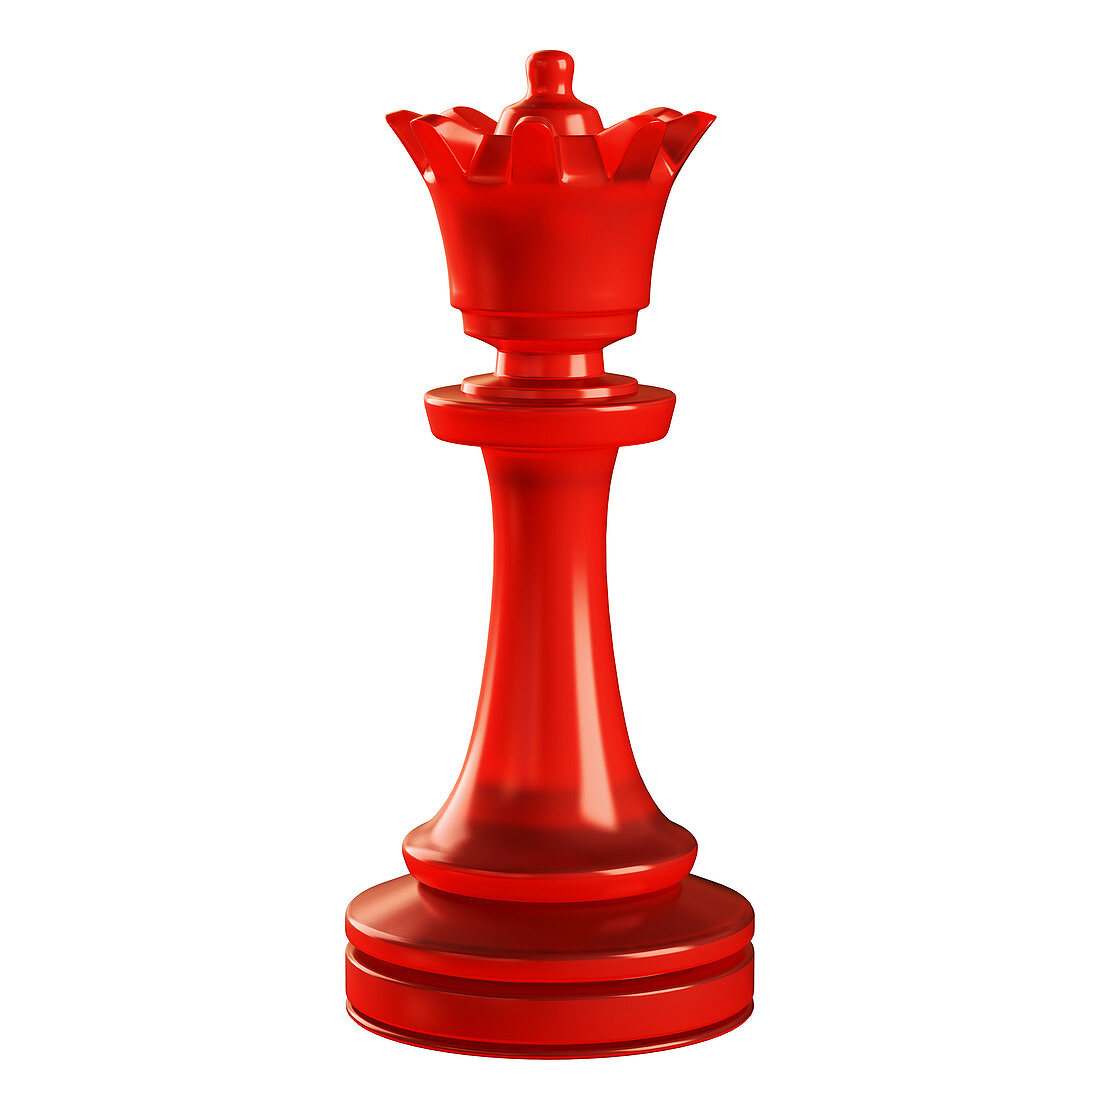 Queen chess piece,illustration